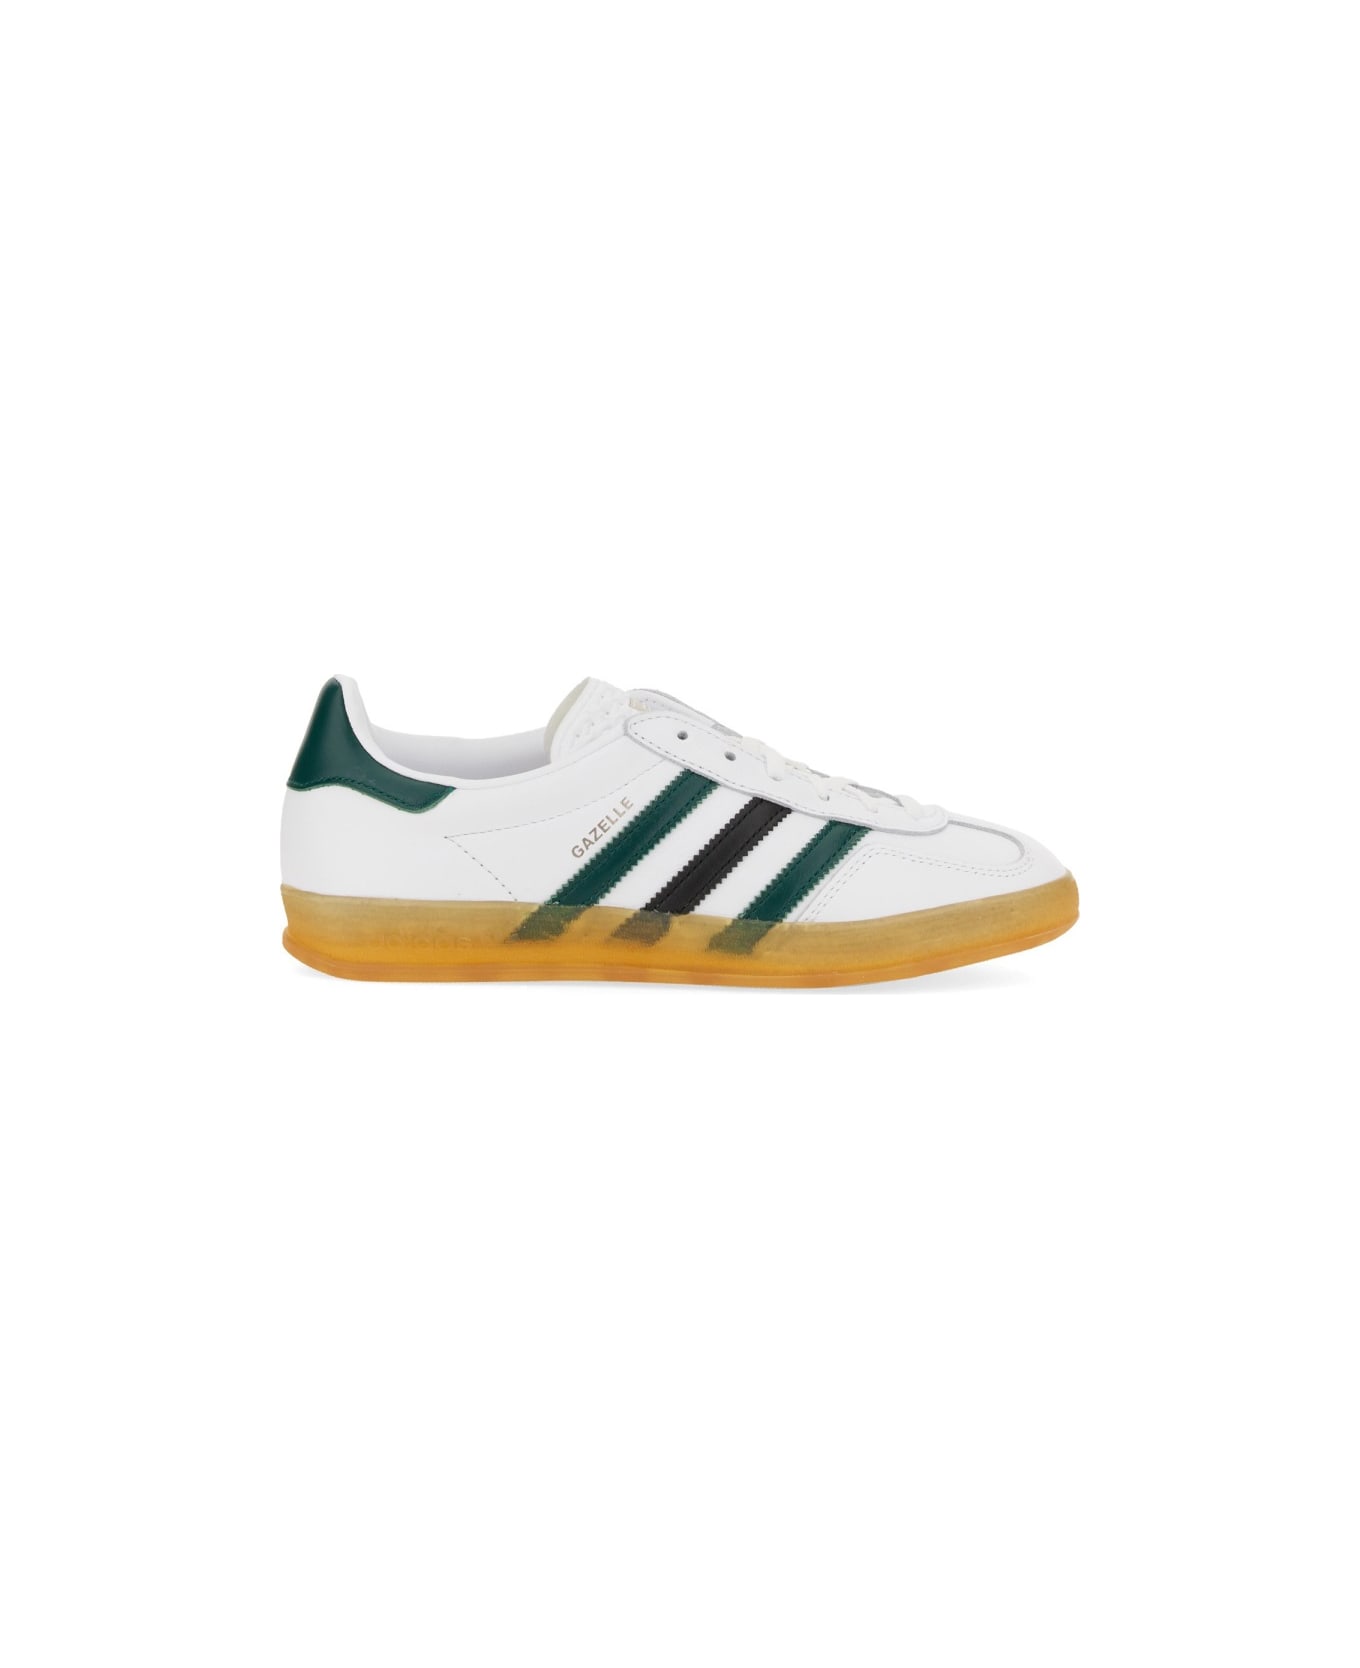 Adidas Originals Gazelle Indoor Shoe - Ftwwht/cgreen/cblack